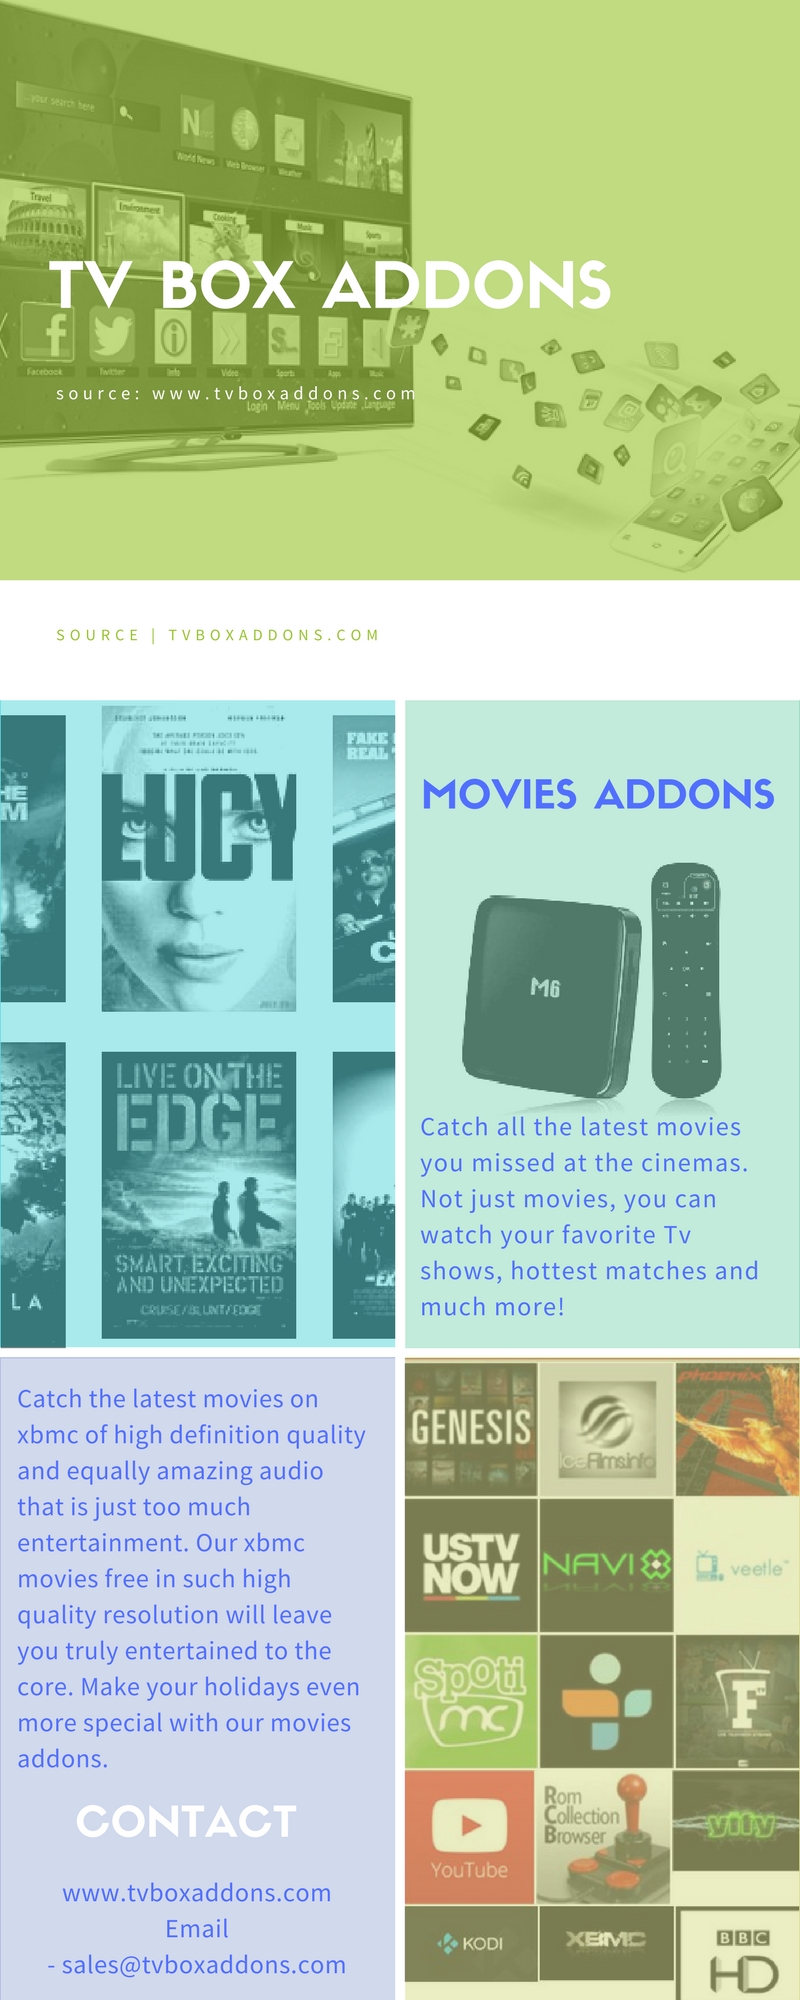 Tv box addons - movies addons.jpg  by tvboxaddons